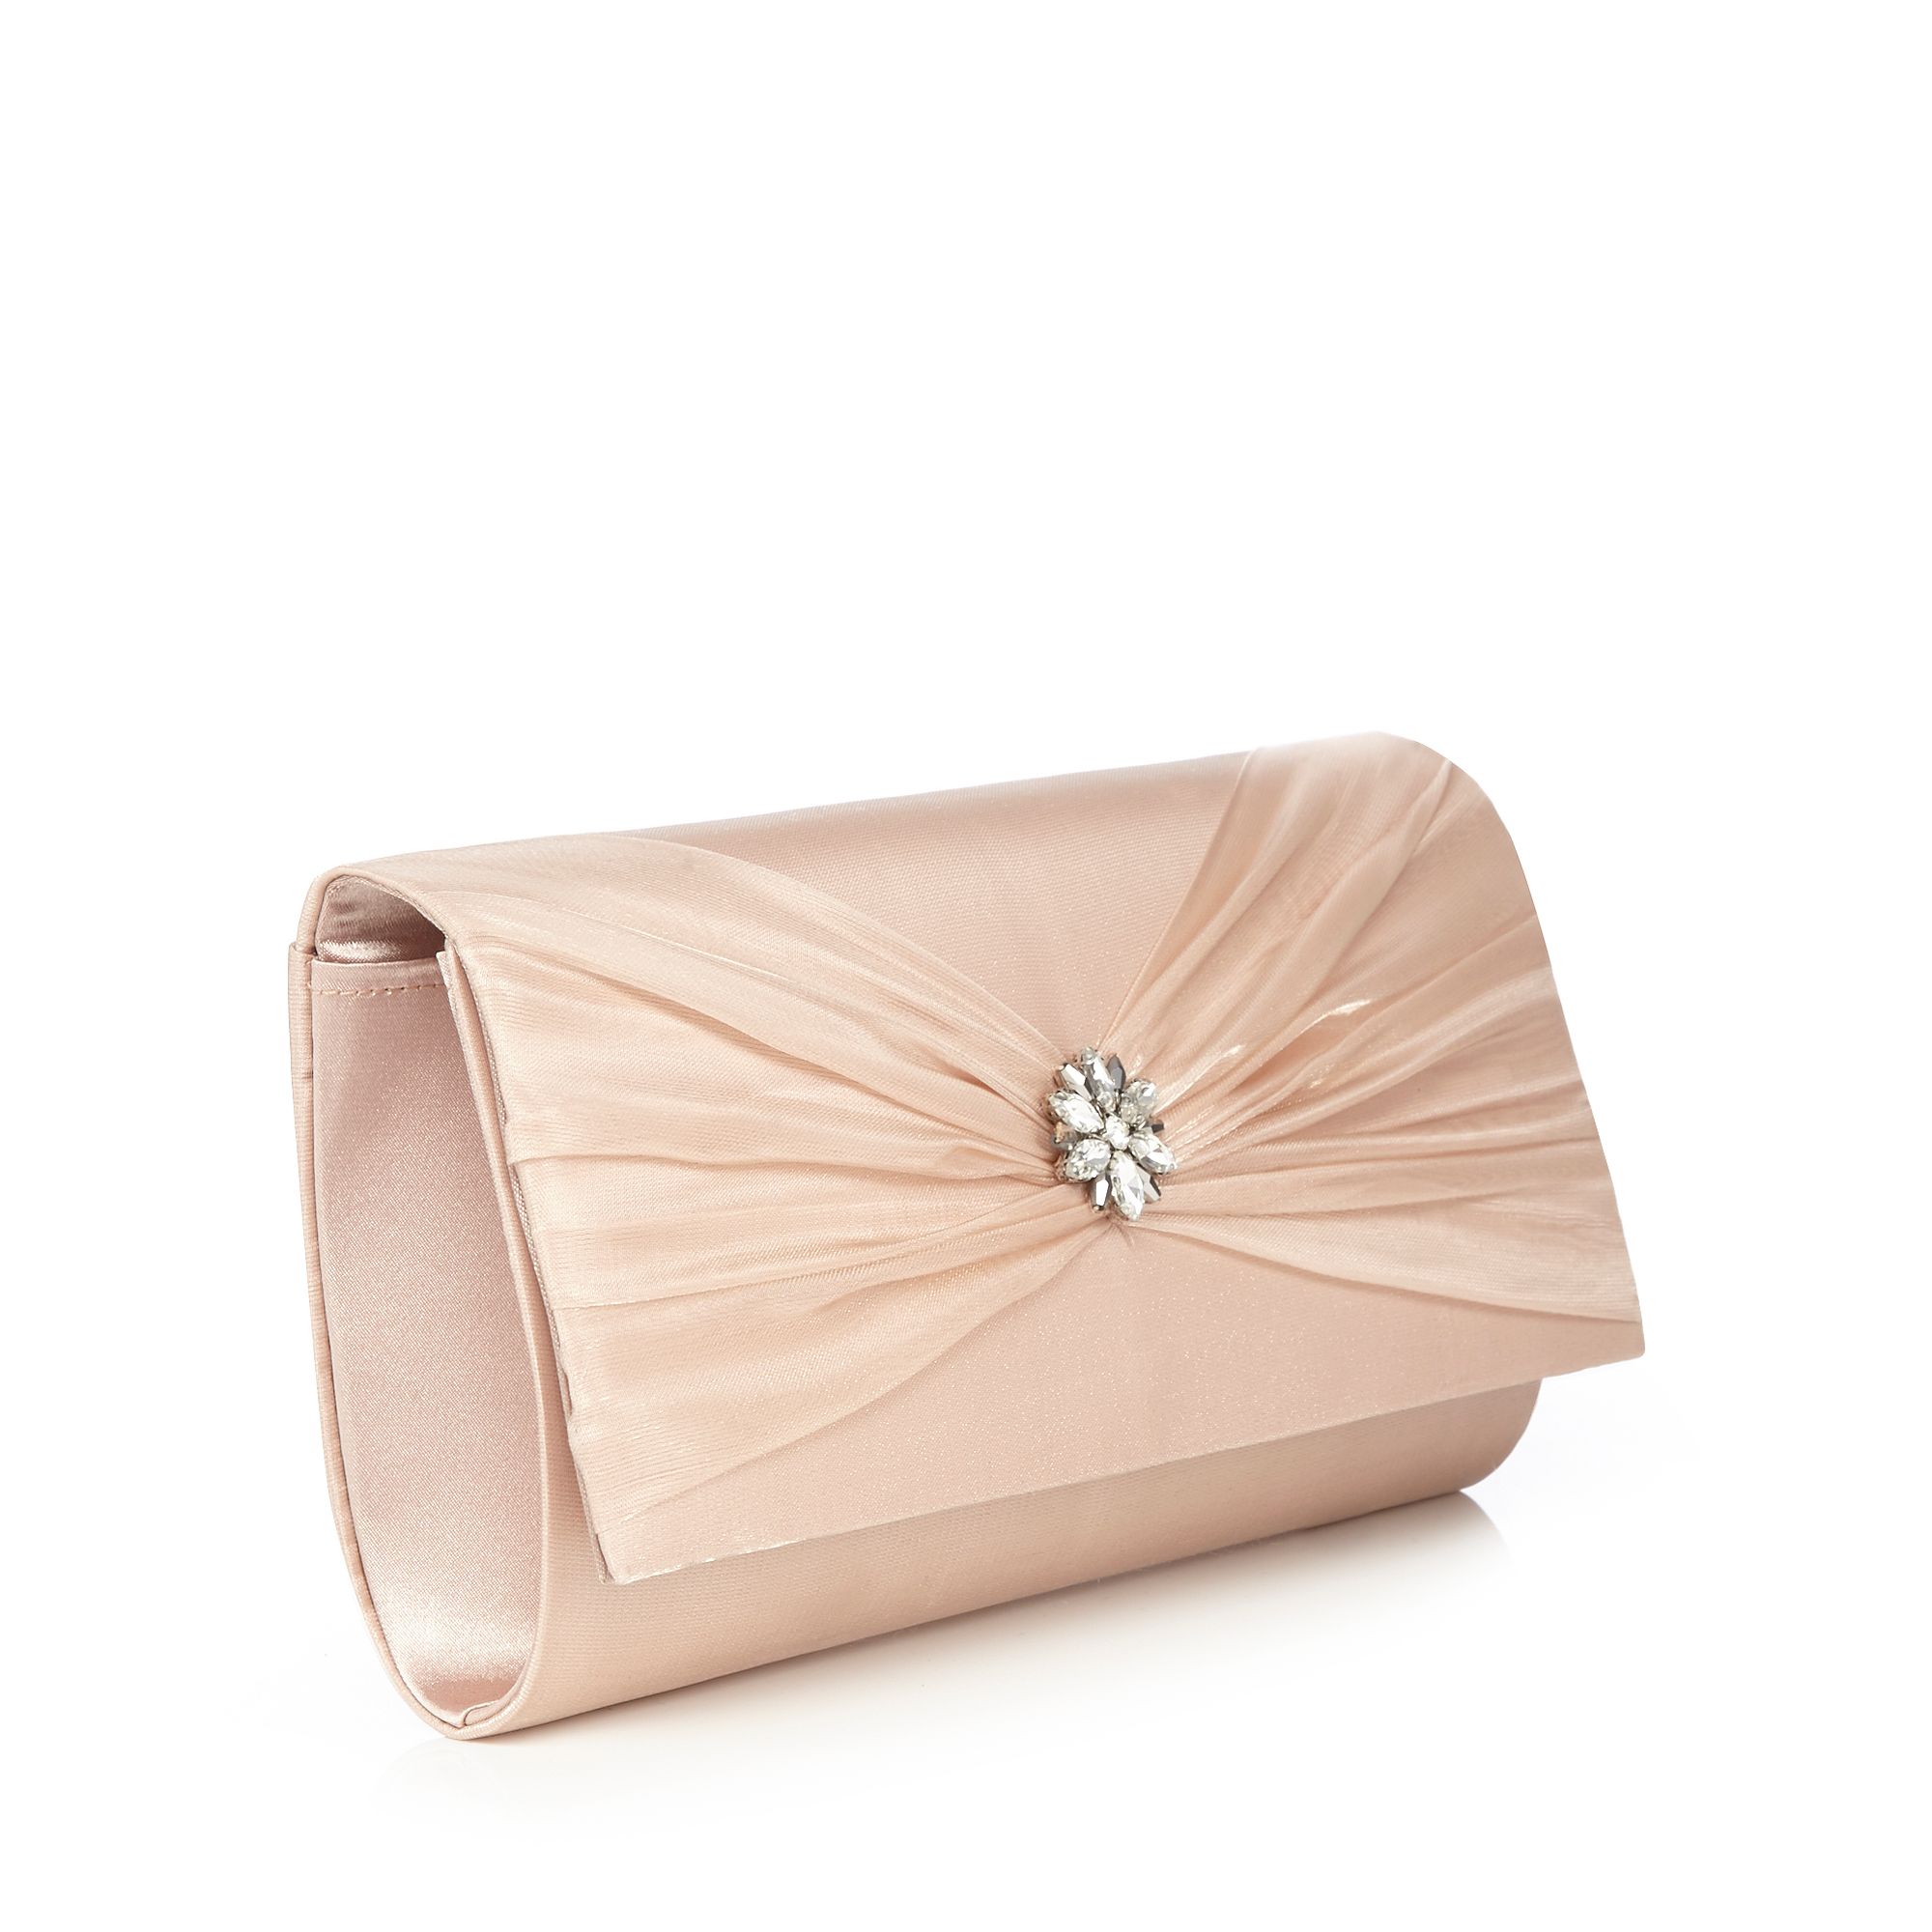 Debut Womens Beige Bow Detail Jewel Embellished Clutch Bag From Debenhams | eBay